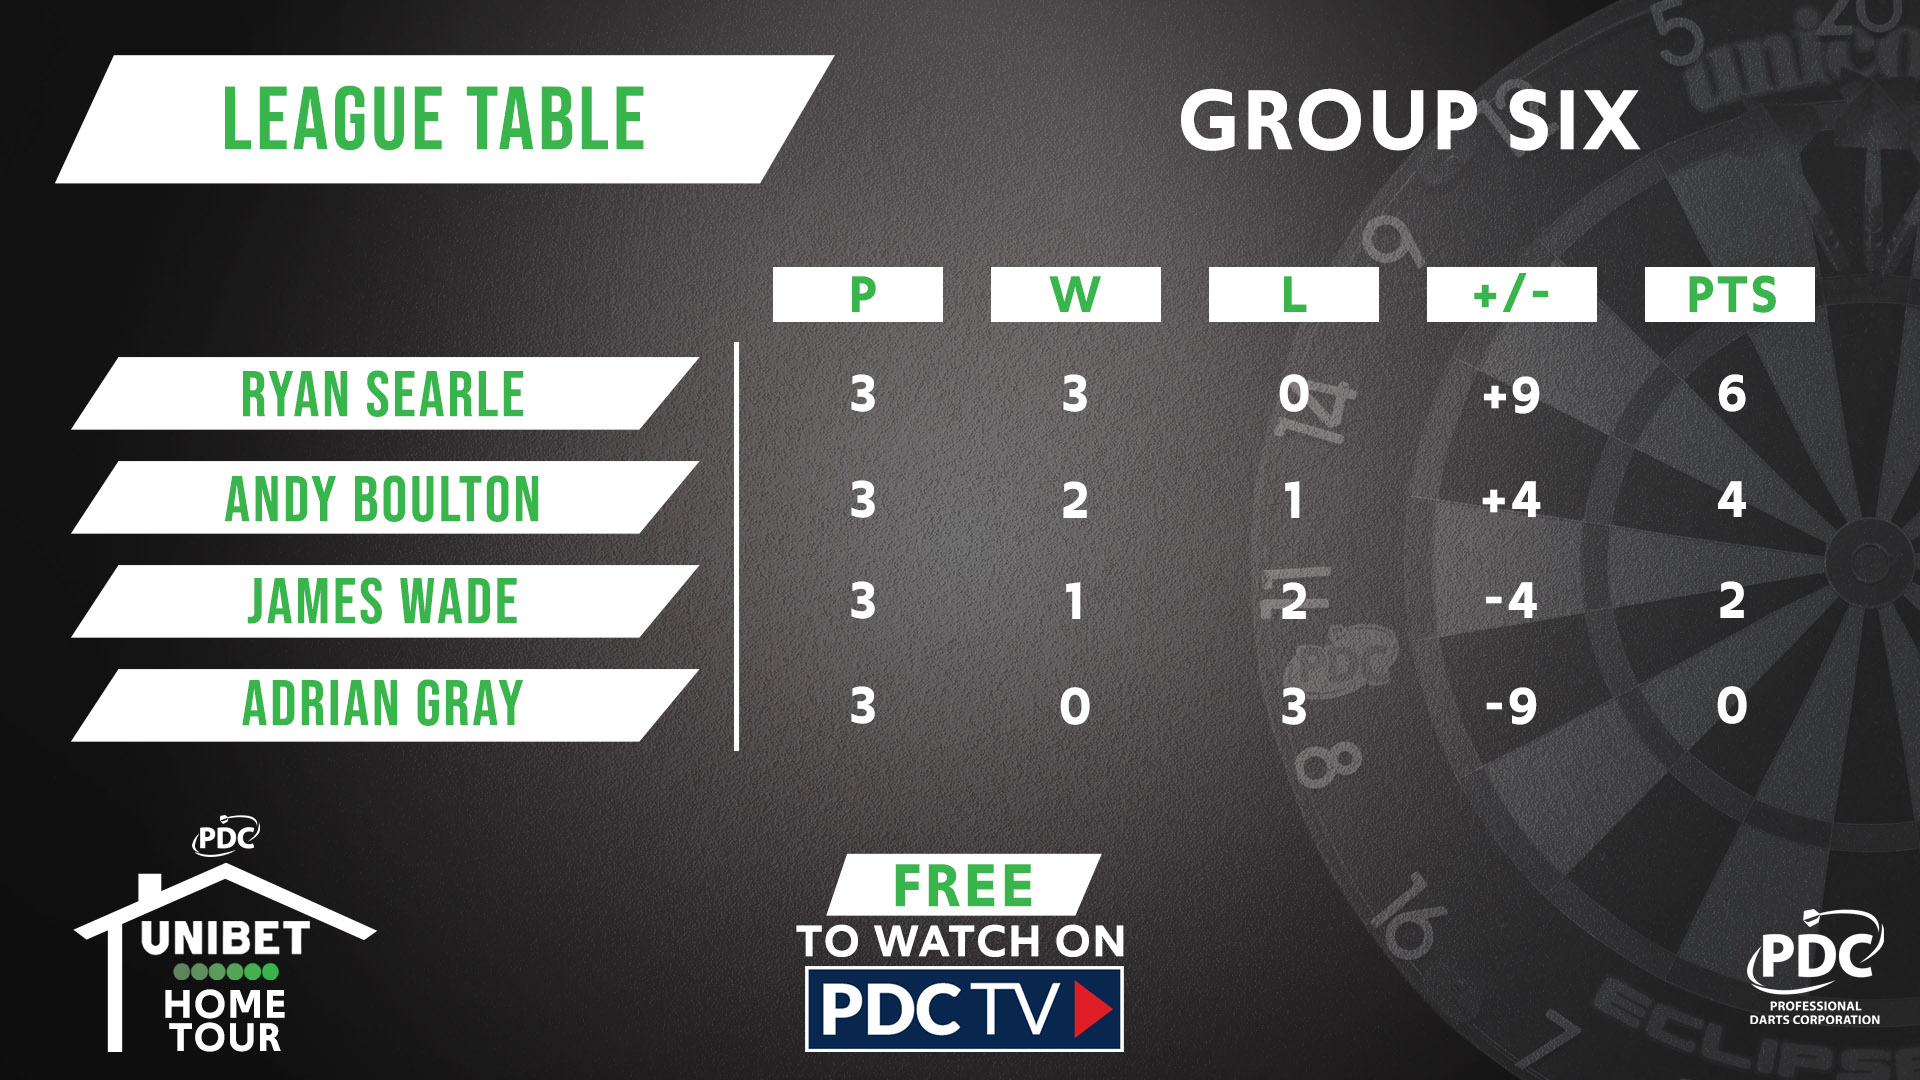 Group Six table